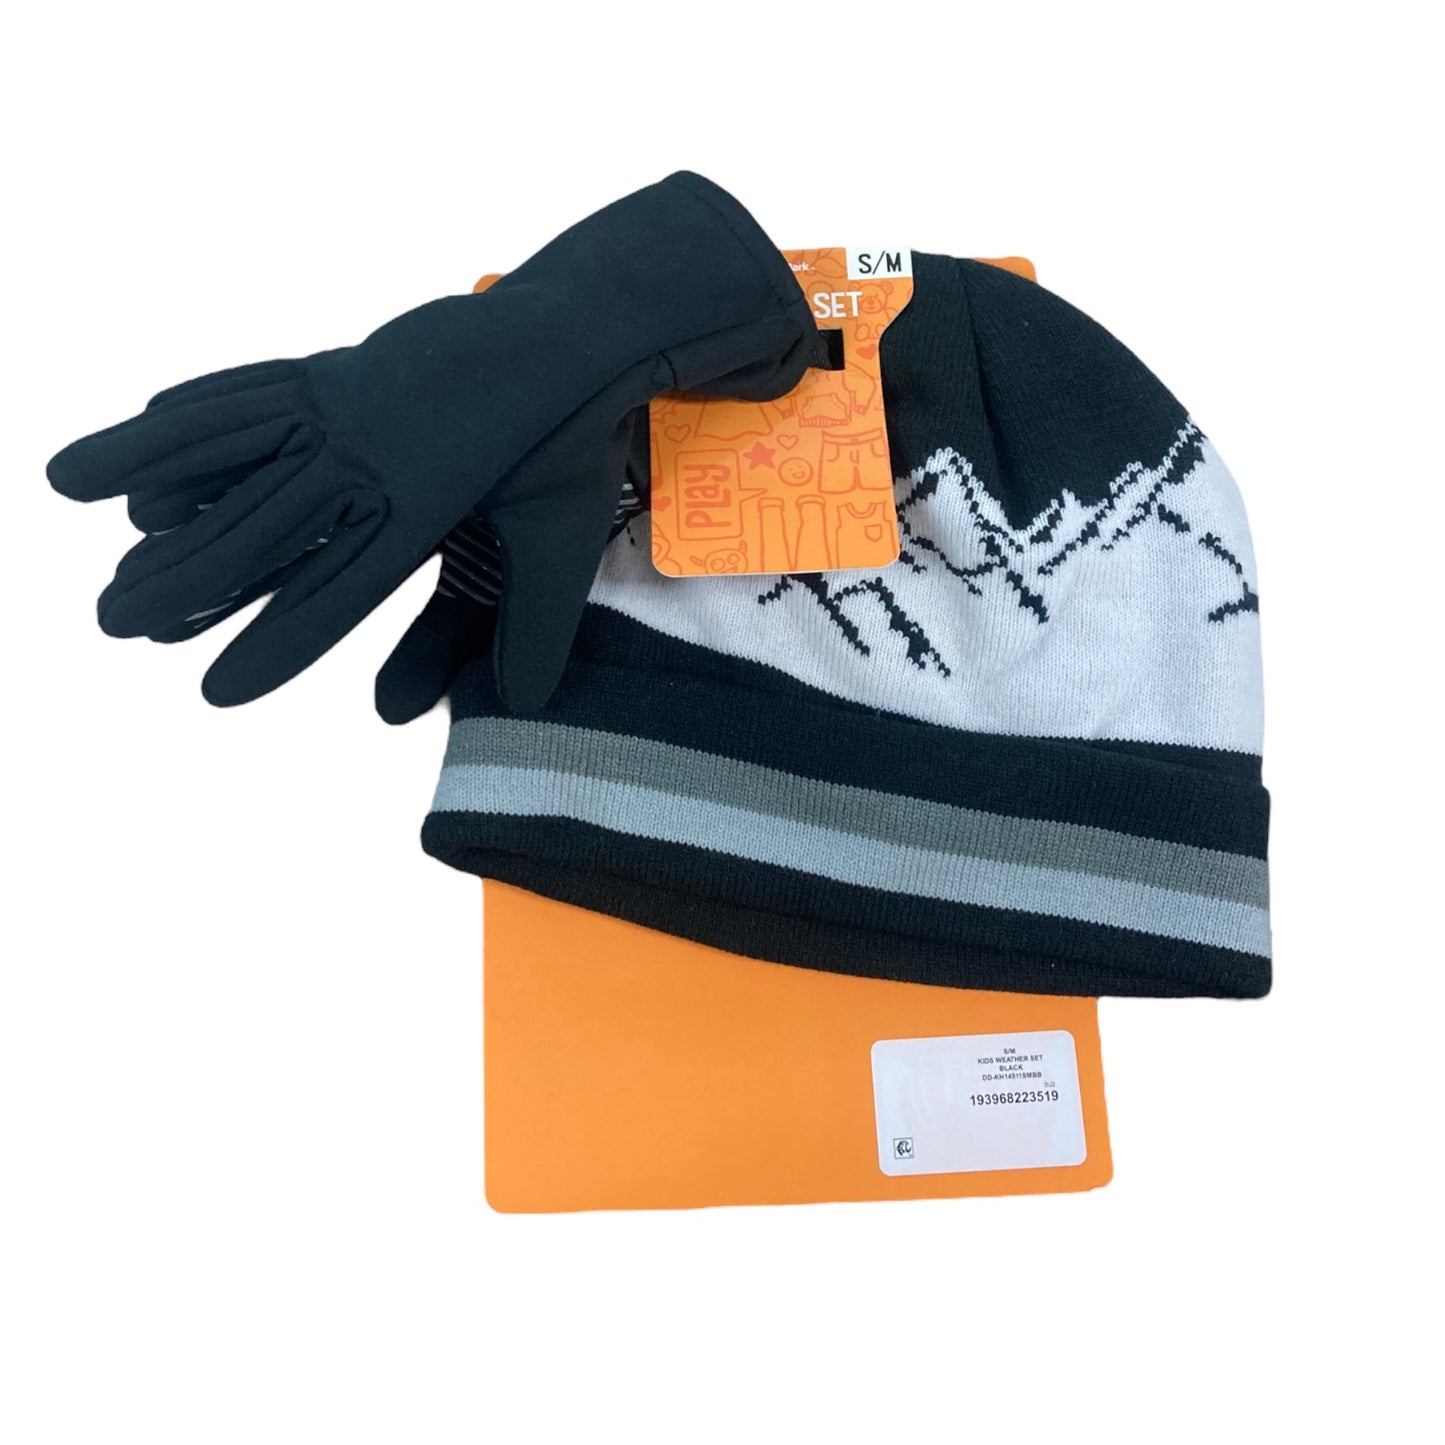 Member's Mark Kid's Flat Knit Beanie Hat With Pom Pom & Gloves Set